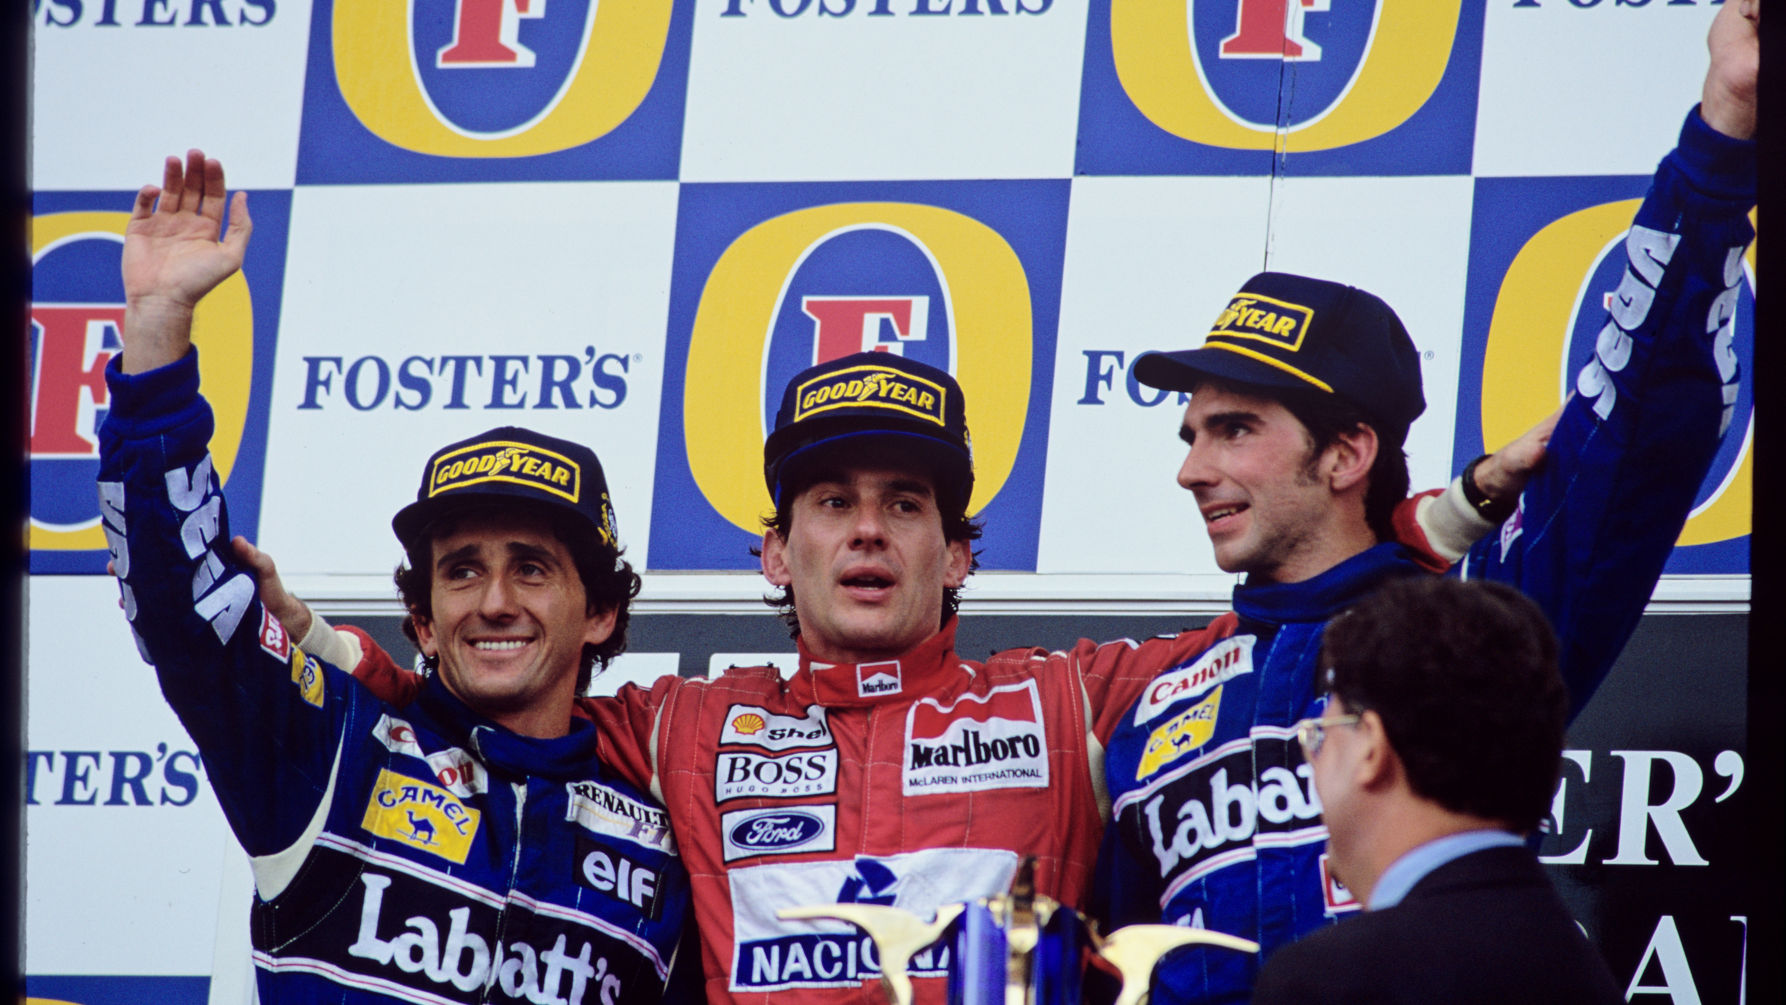 1993 - Ayrton's final race with McLaren, victory at the Australian Grand Prix. Photographer Credit Norio Koike